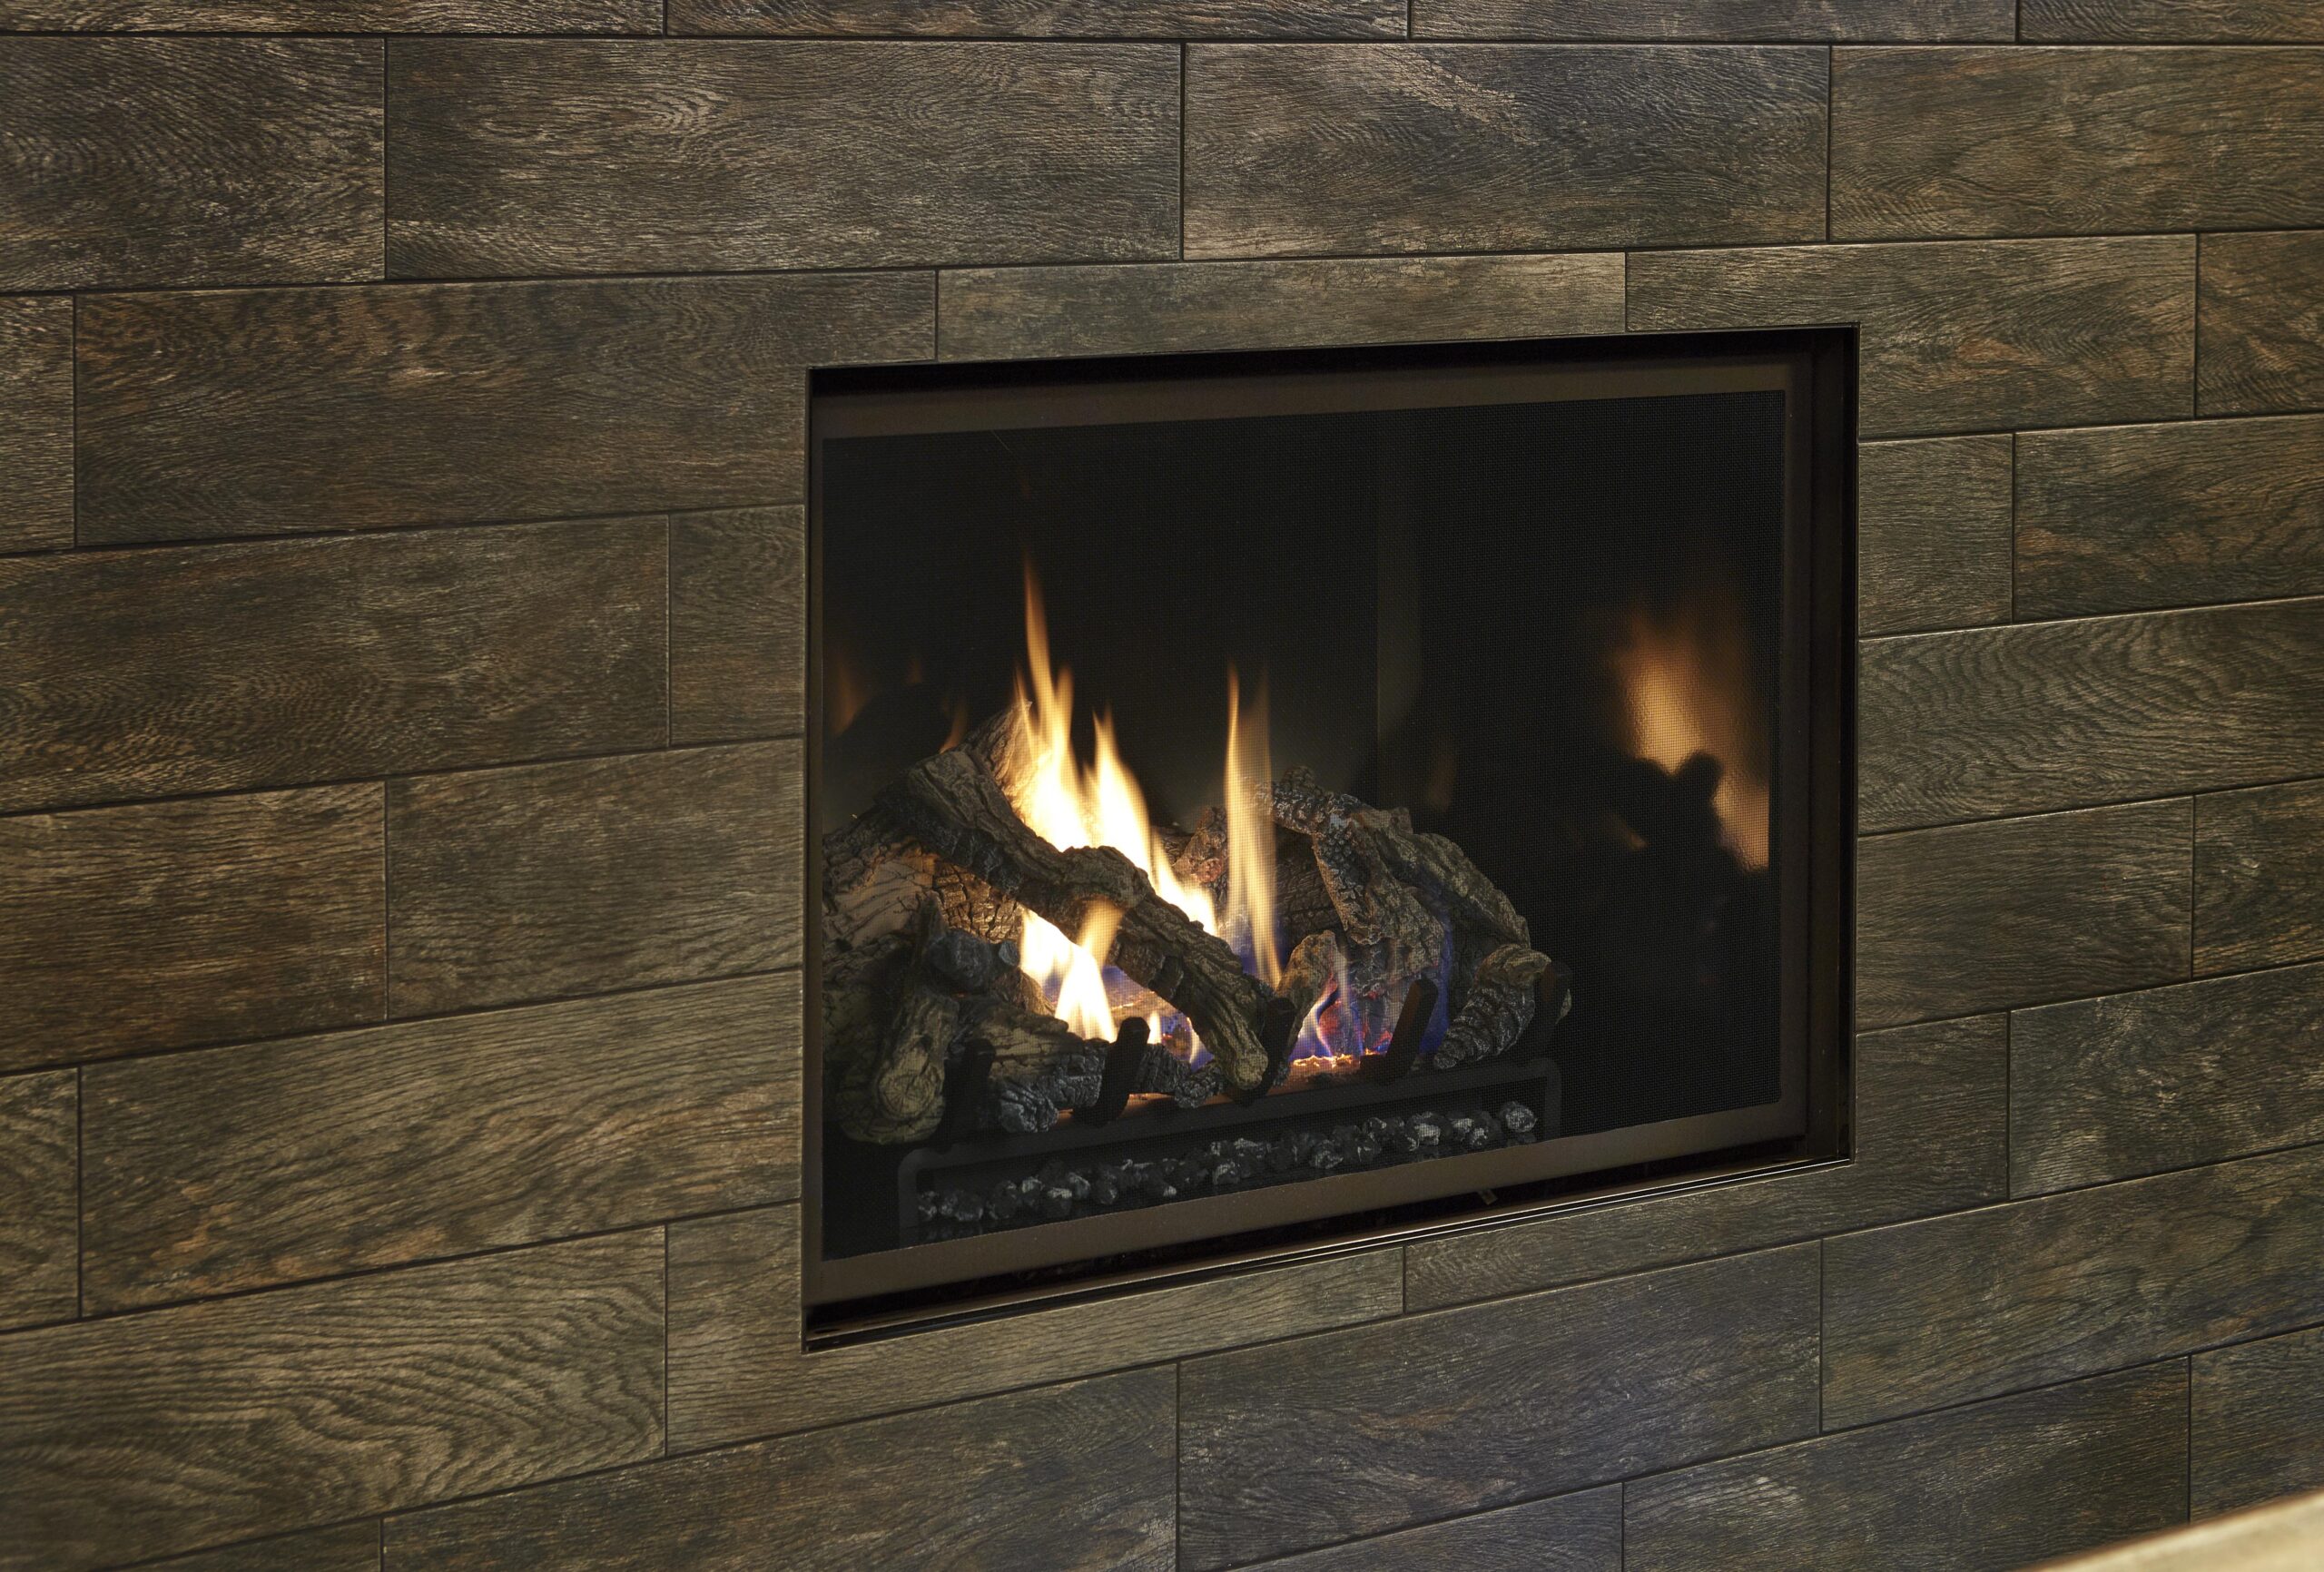 Fireplace Xtrordinair 864 Clean Face Gas Fireplace with Adjustable Tile Trim Kit and Black Enamel Fireback set in wood grain tile